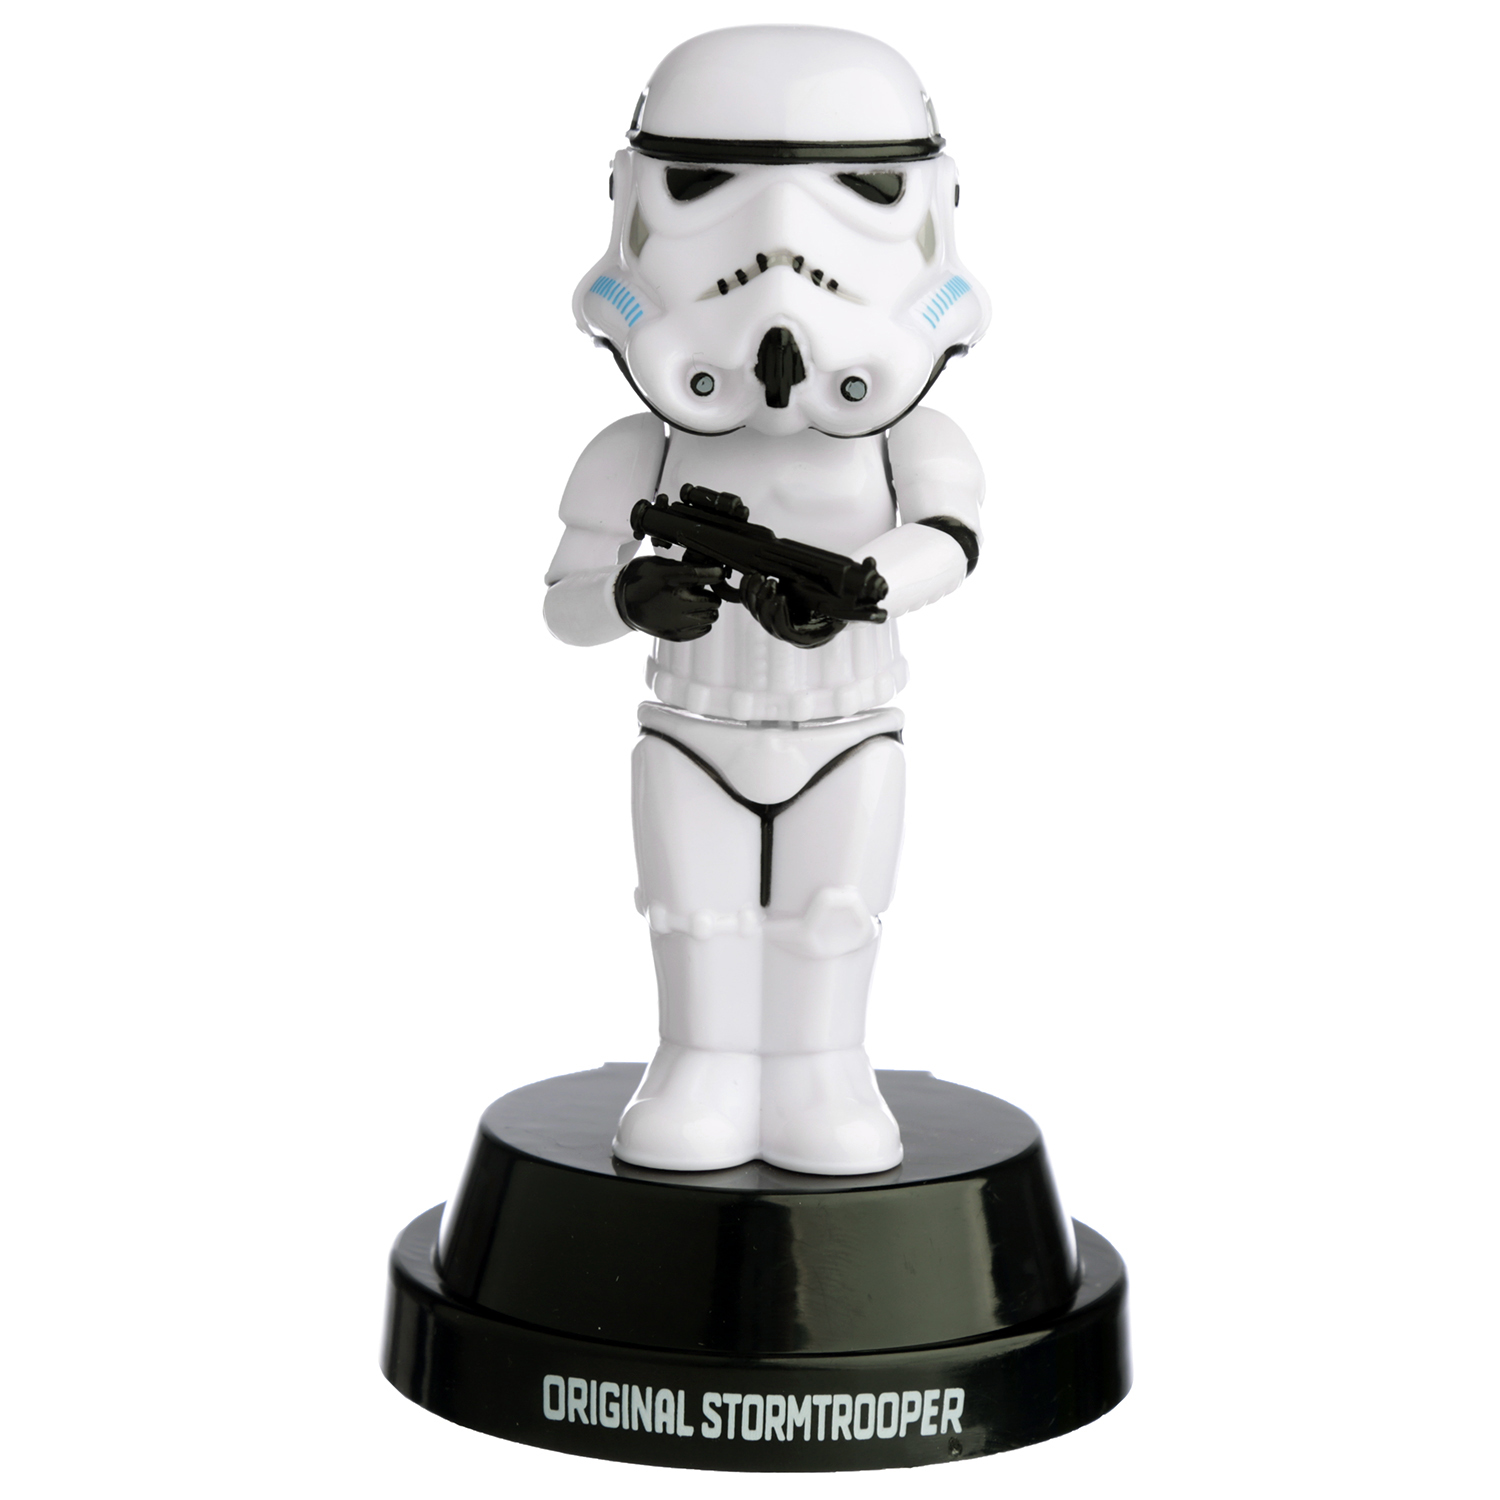 The Original Stormtrooper